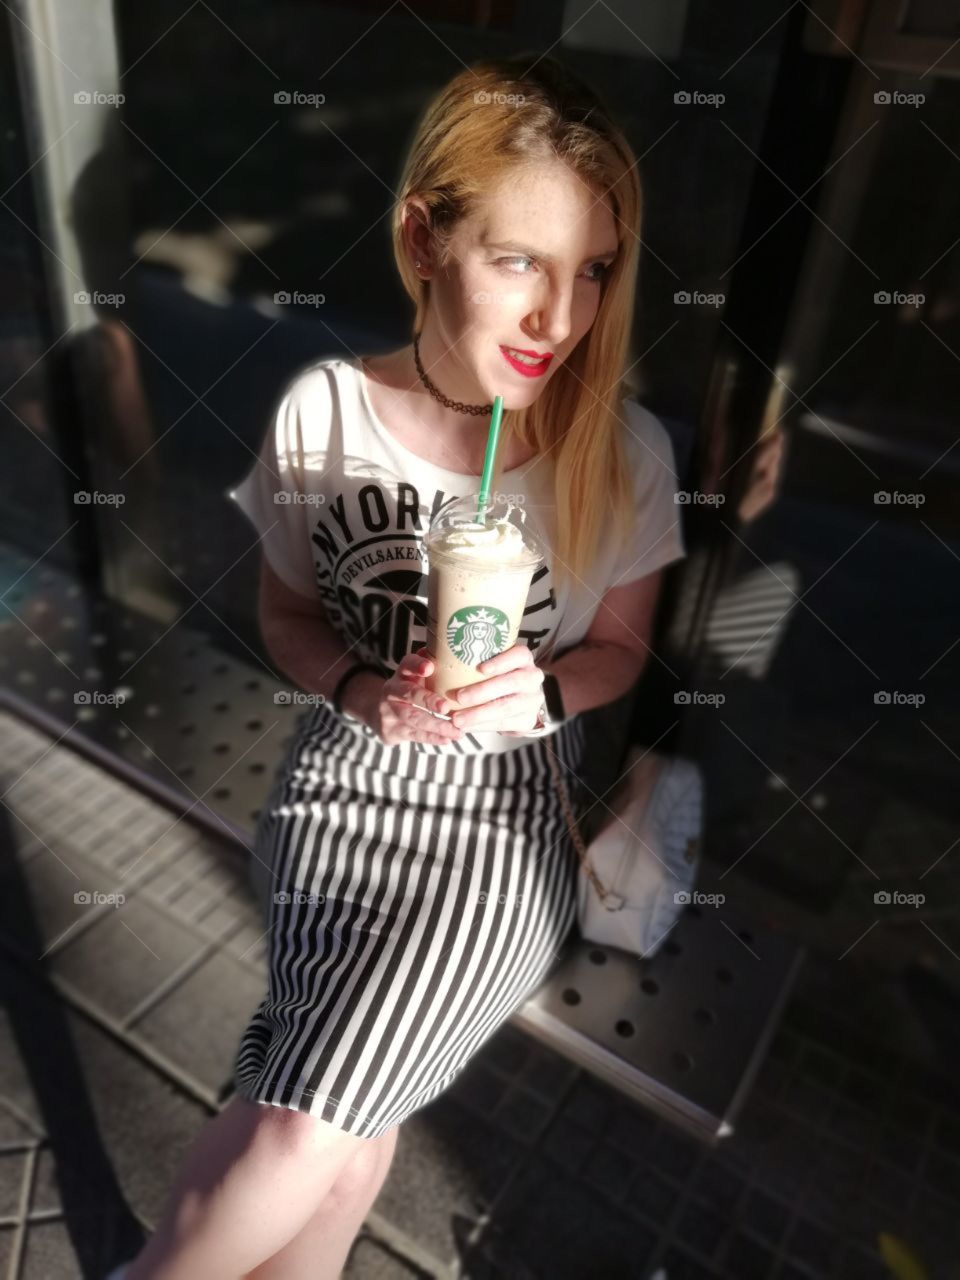 Starbucks ☕